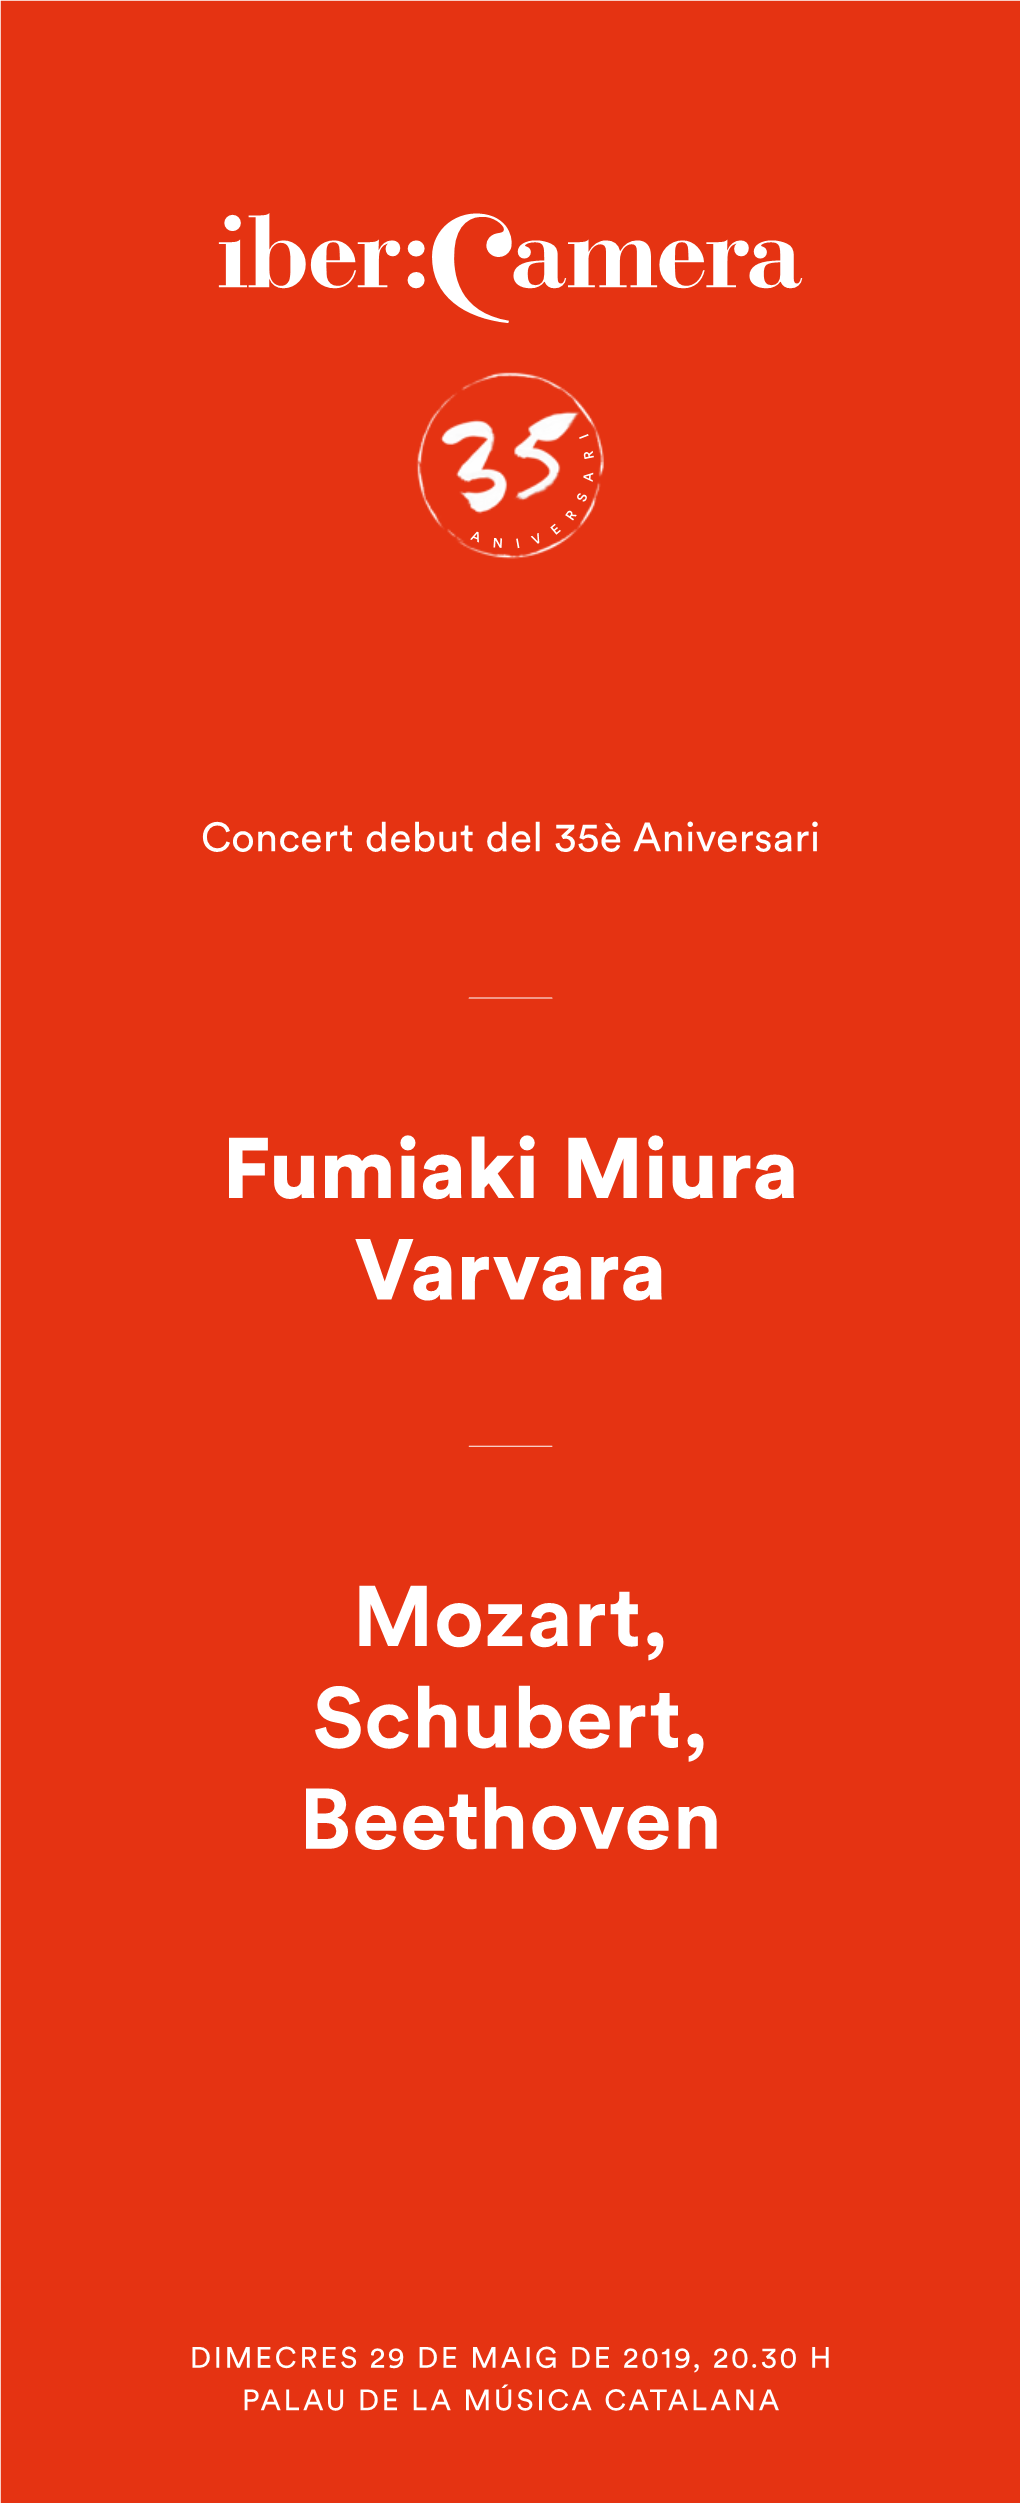 Fumiaki Miura Varvara Mozart, Schubert, Beethoven